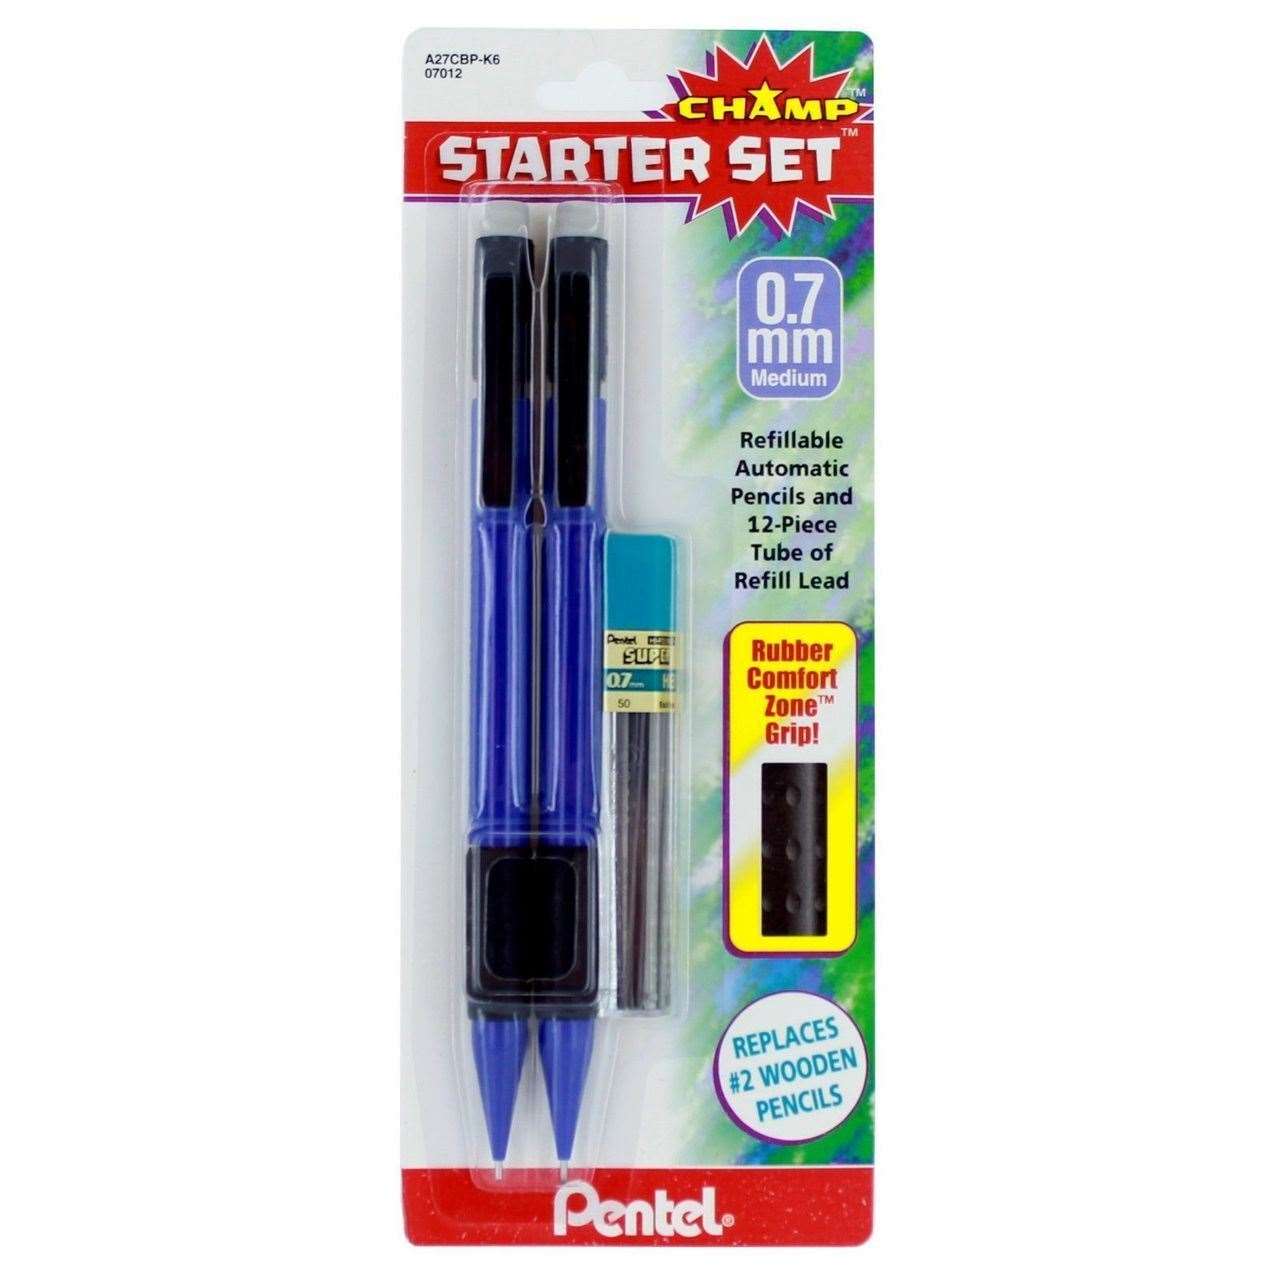 2-Pack Pentel Champ Mechanical Pencil 0.7mm Refillable Starter Set + Refills